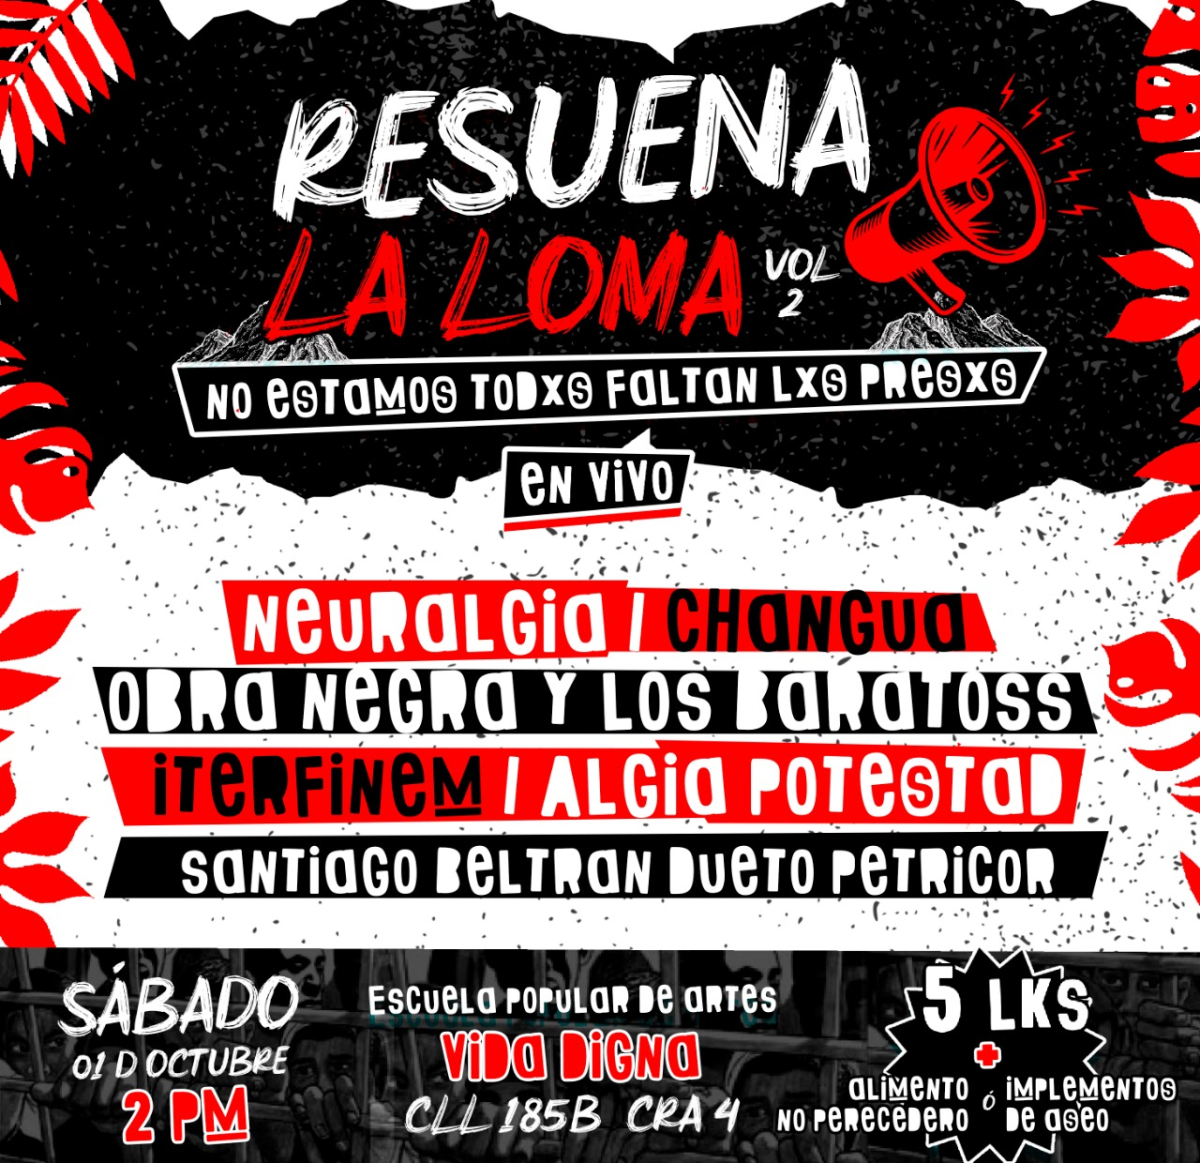 Festival Resuena La Loma Vol.2